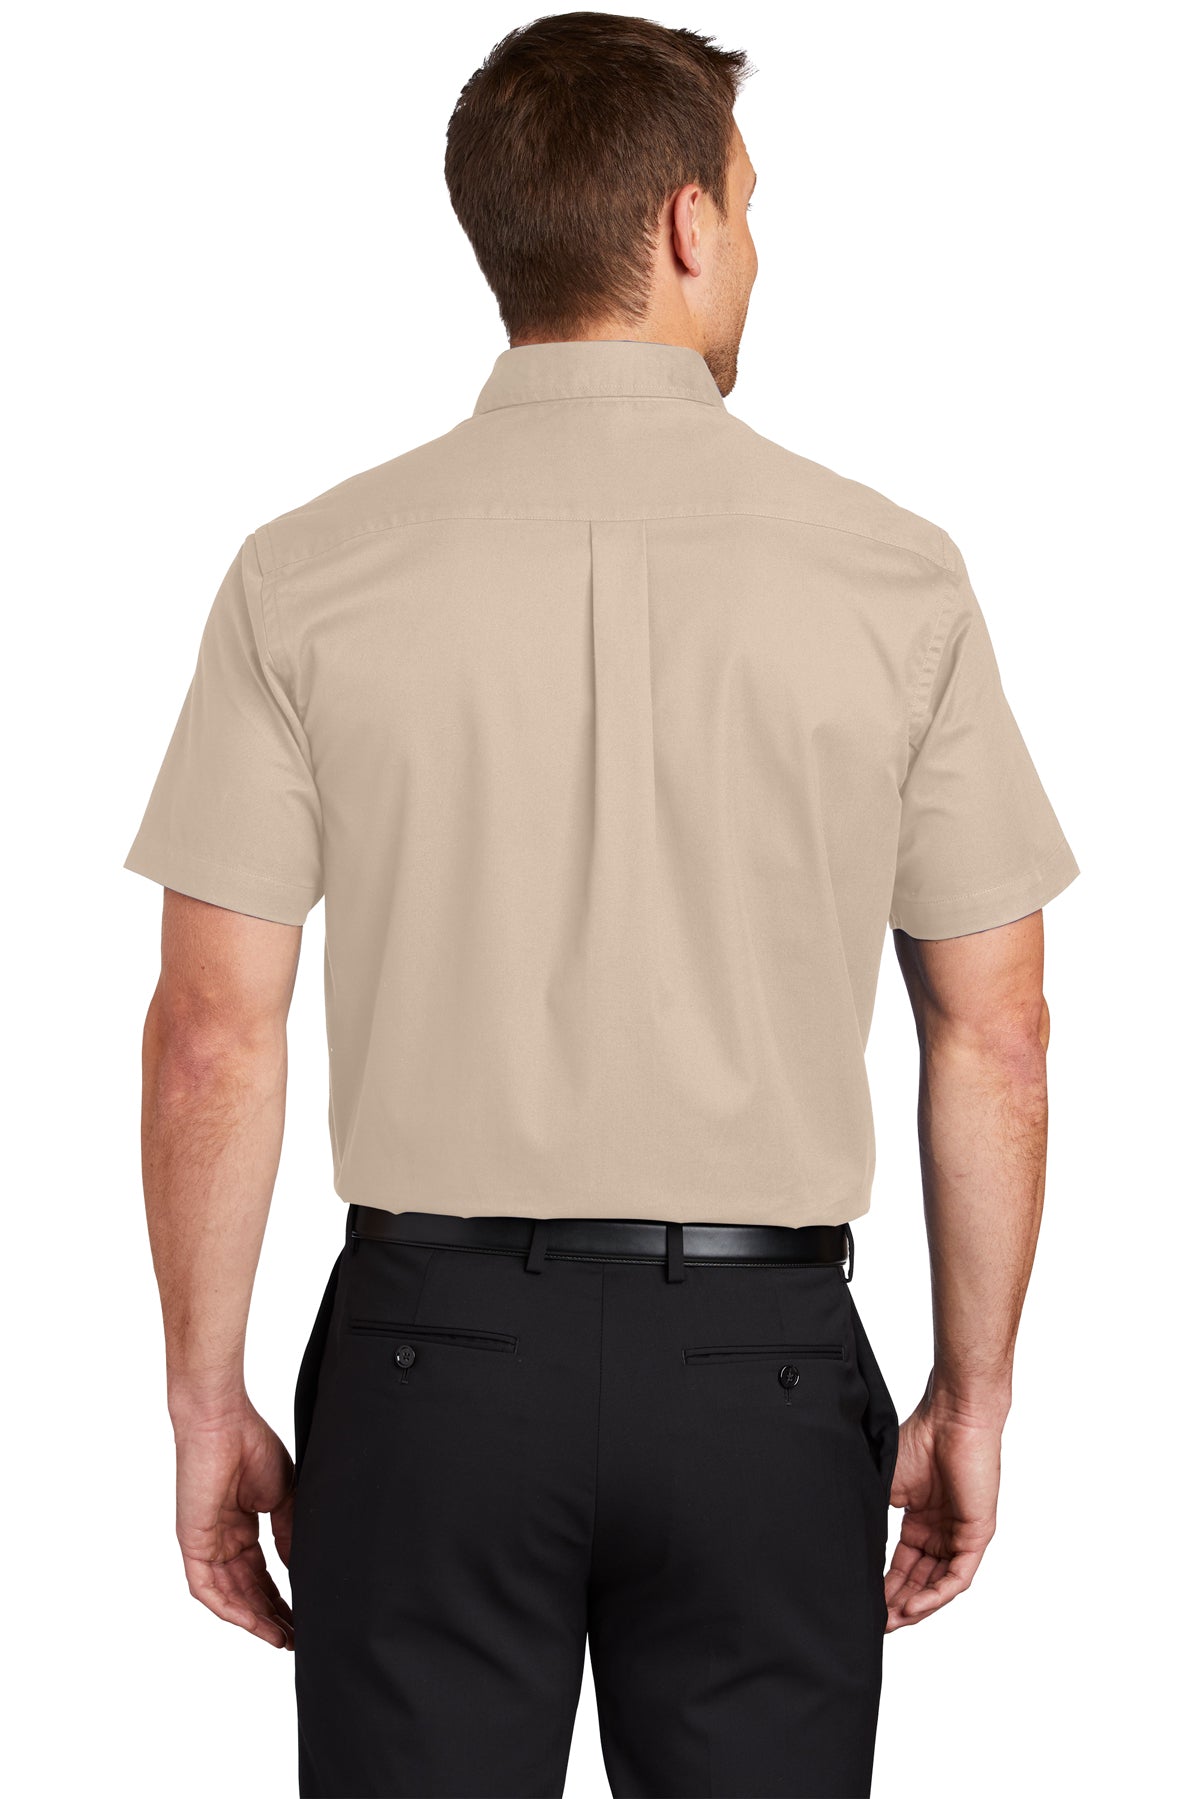 Port Authority Tall Short Sleeve Custom Easy Care Shirts, Stone